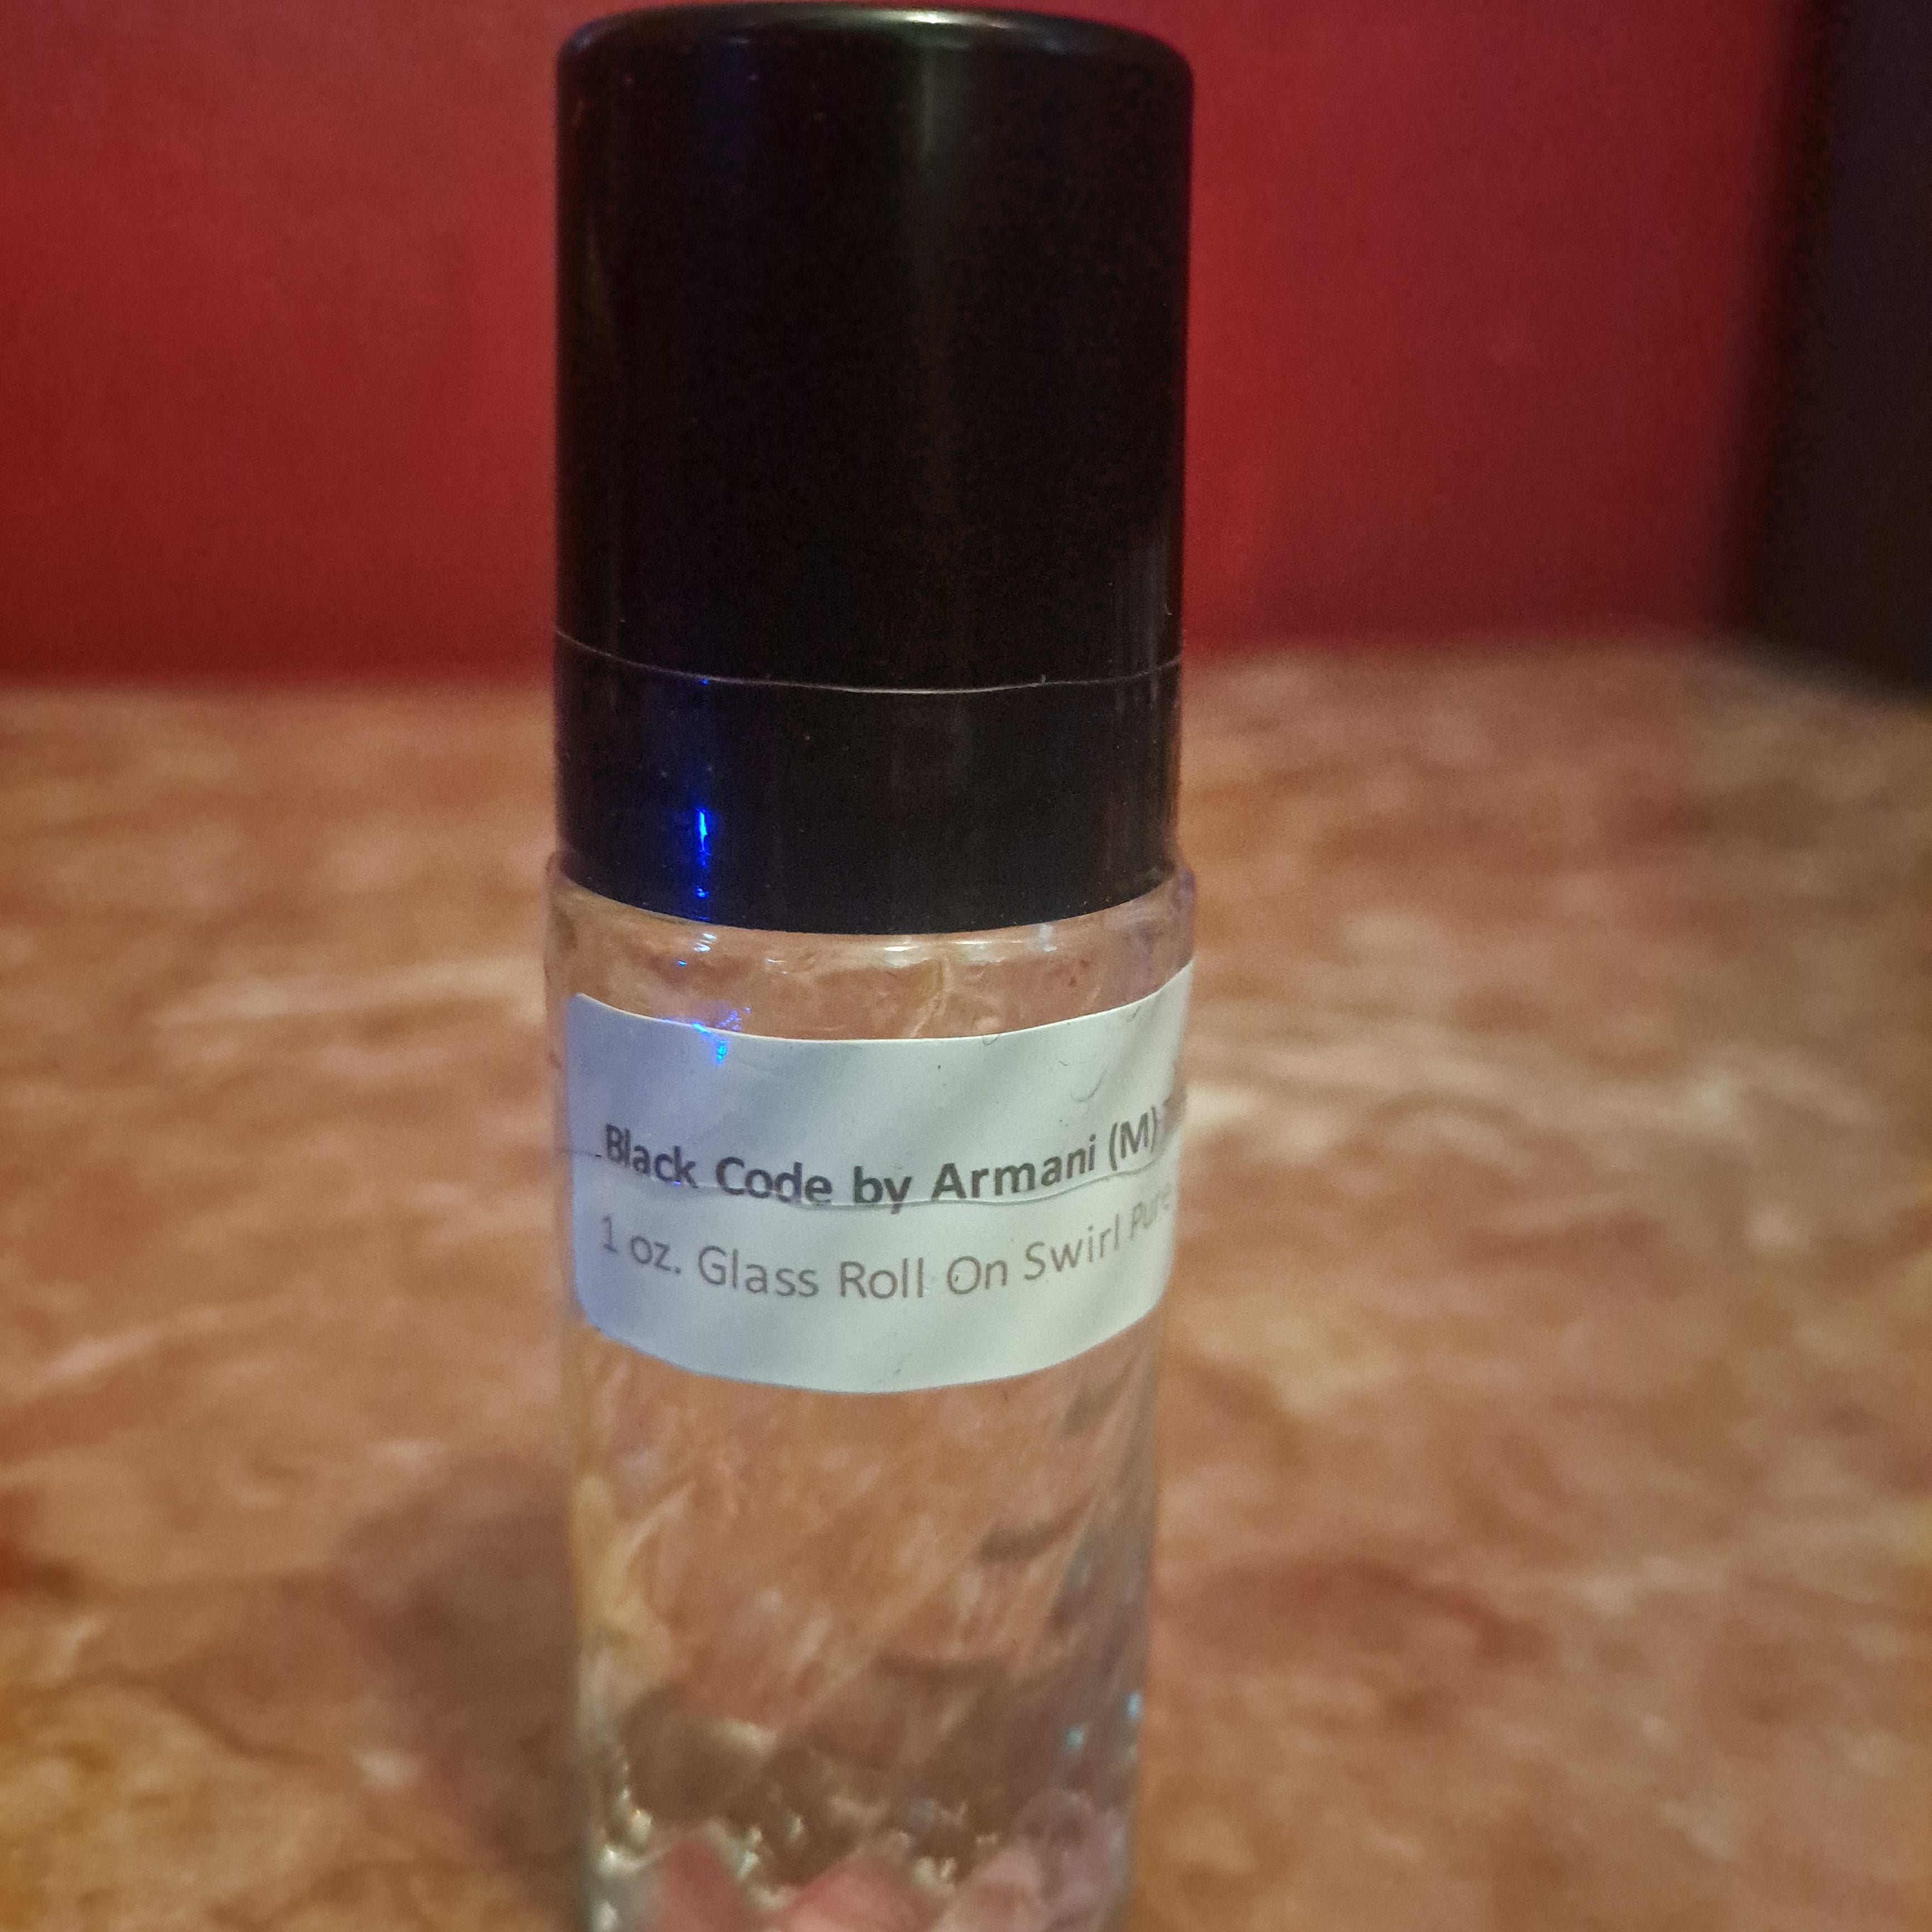 Compare to Armani Black Code 100% Fragrance Oil – Fragrance Oils sold ...